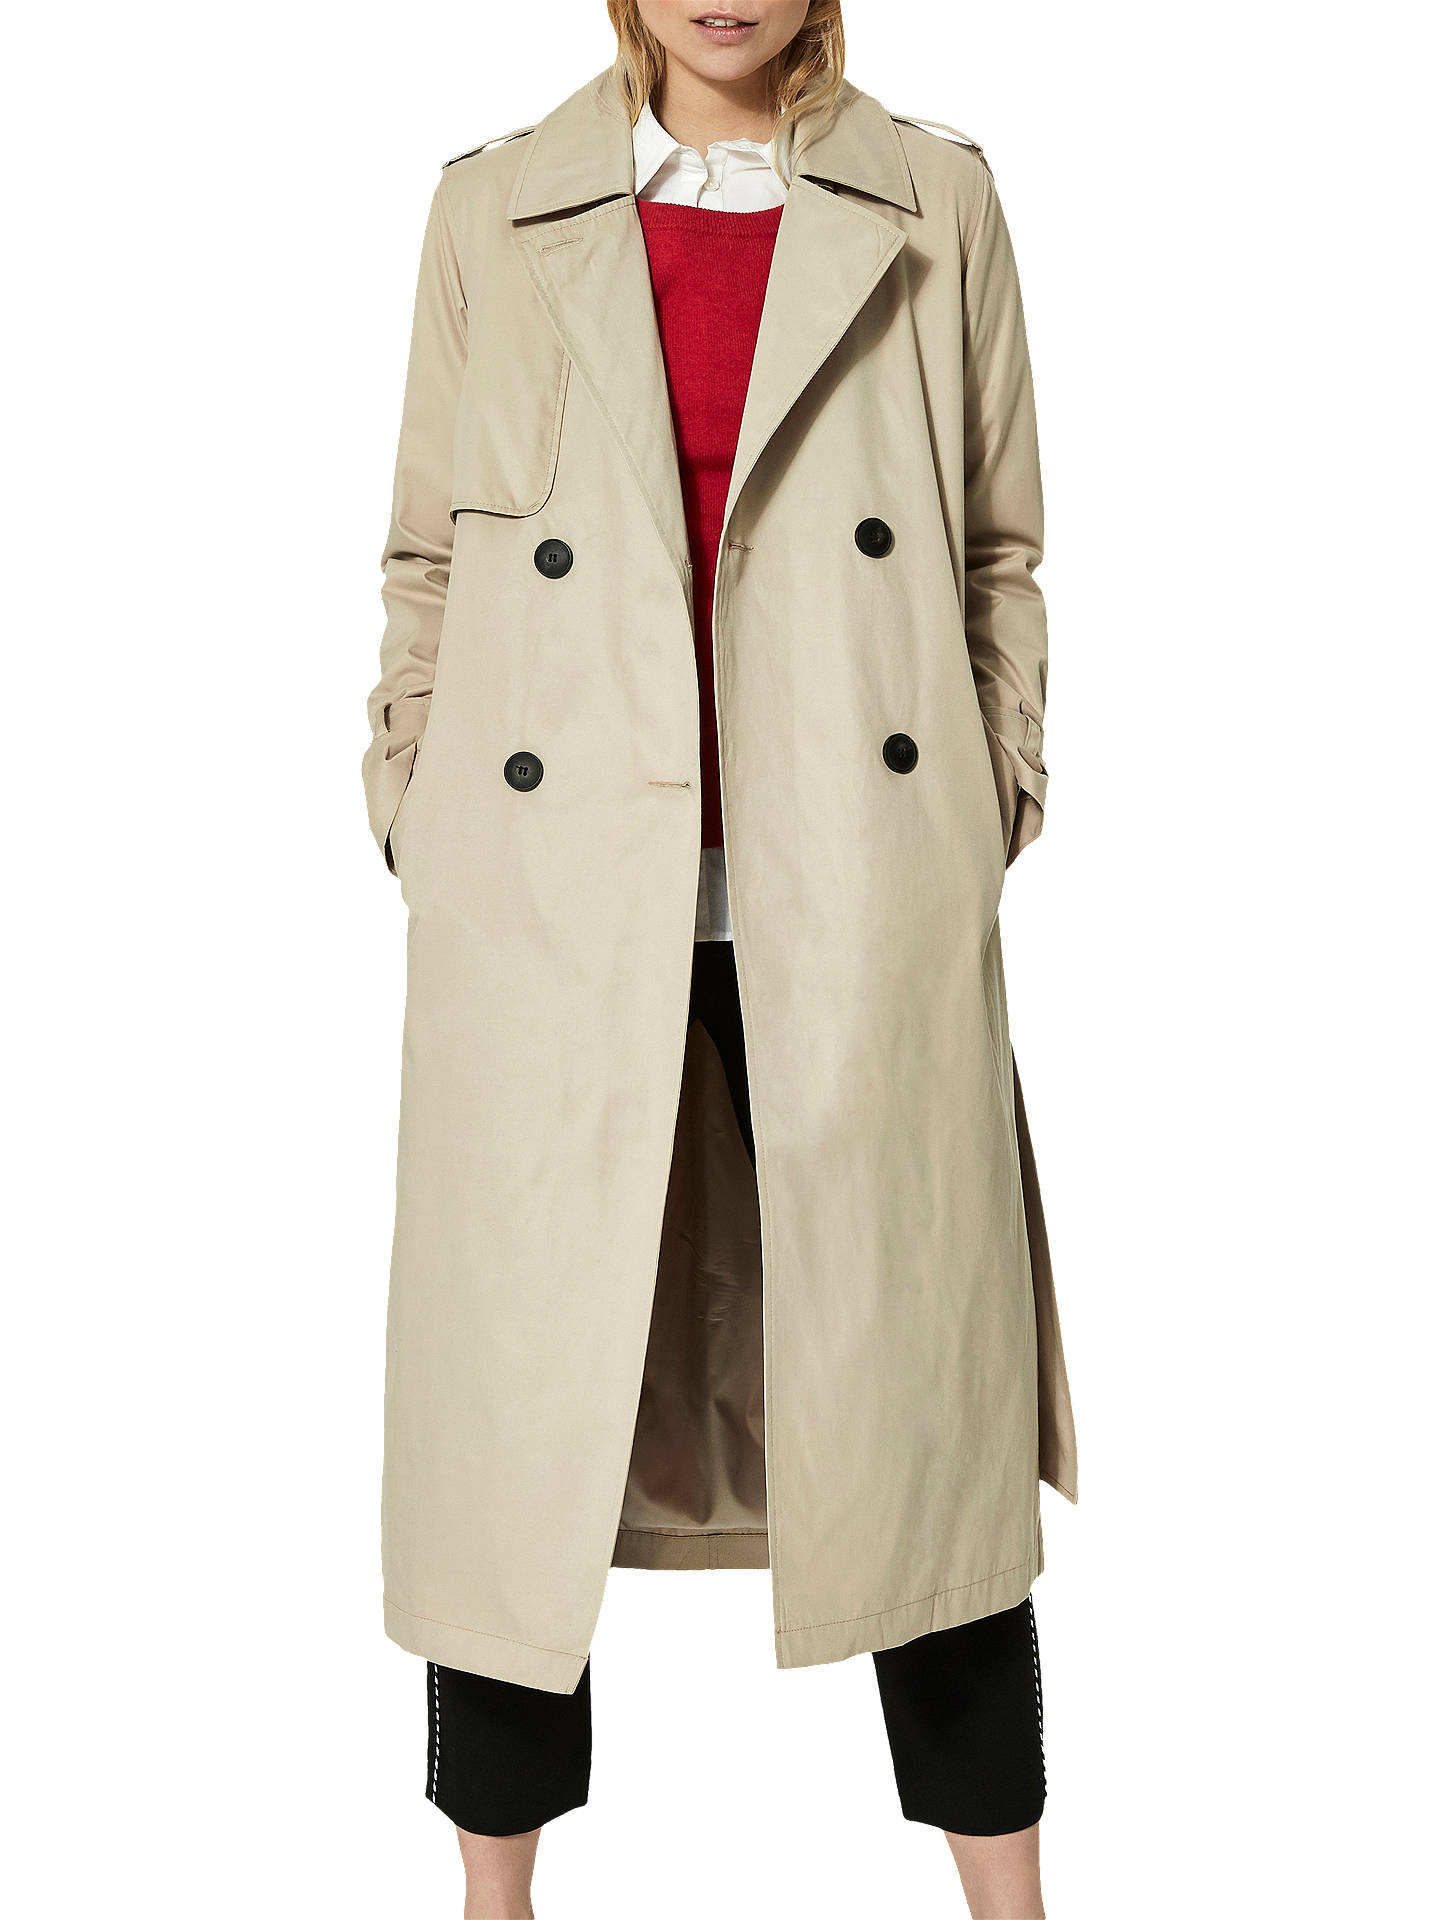 Selected Femme Week Trench Coat, Crockery at John Lewis & Partners